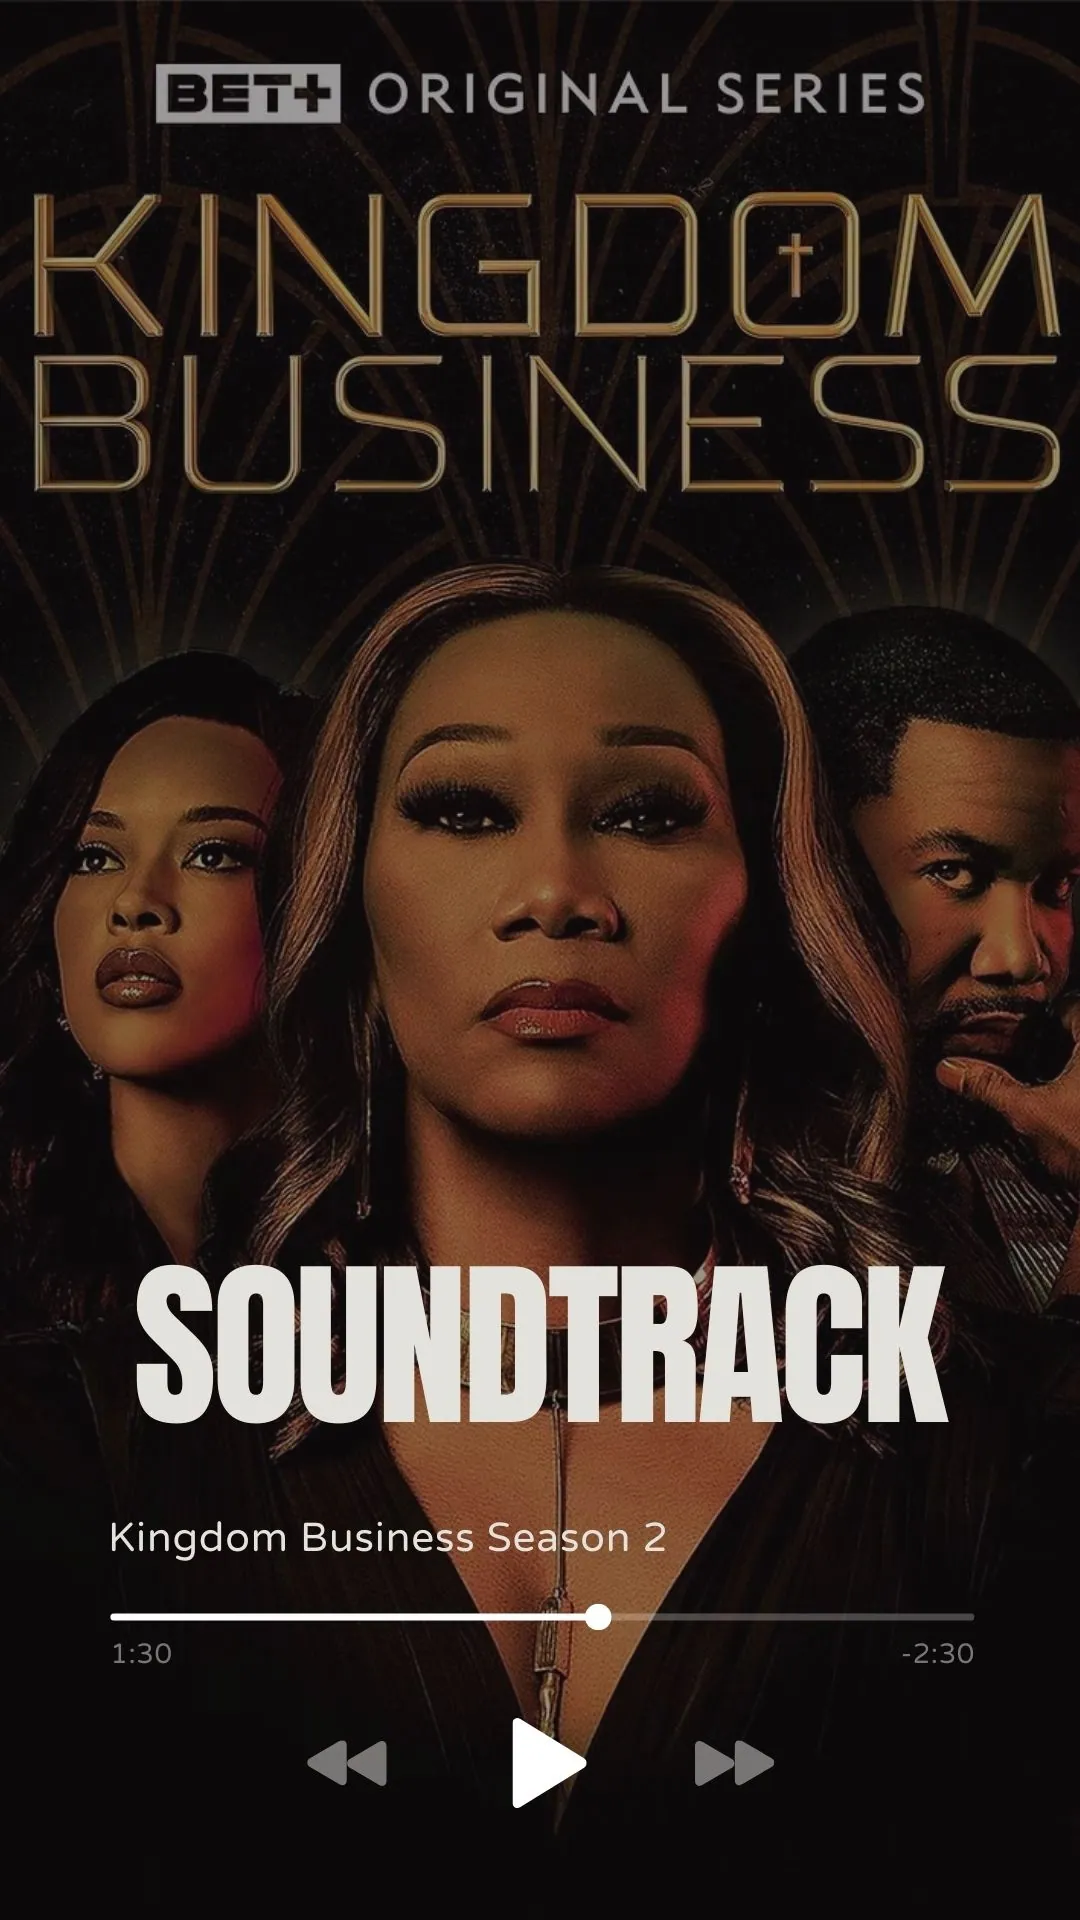 Kingdom Business Season 2 Soundtrack